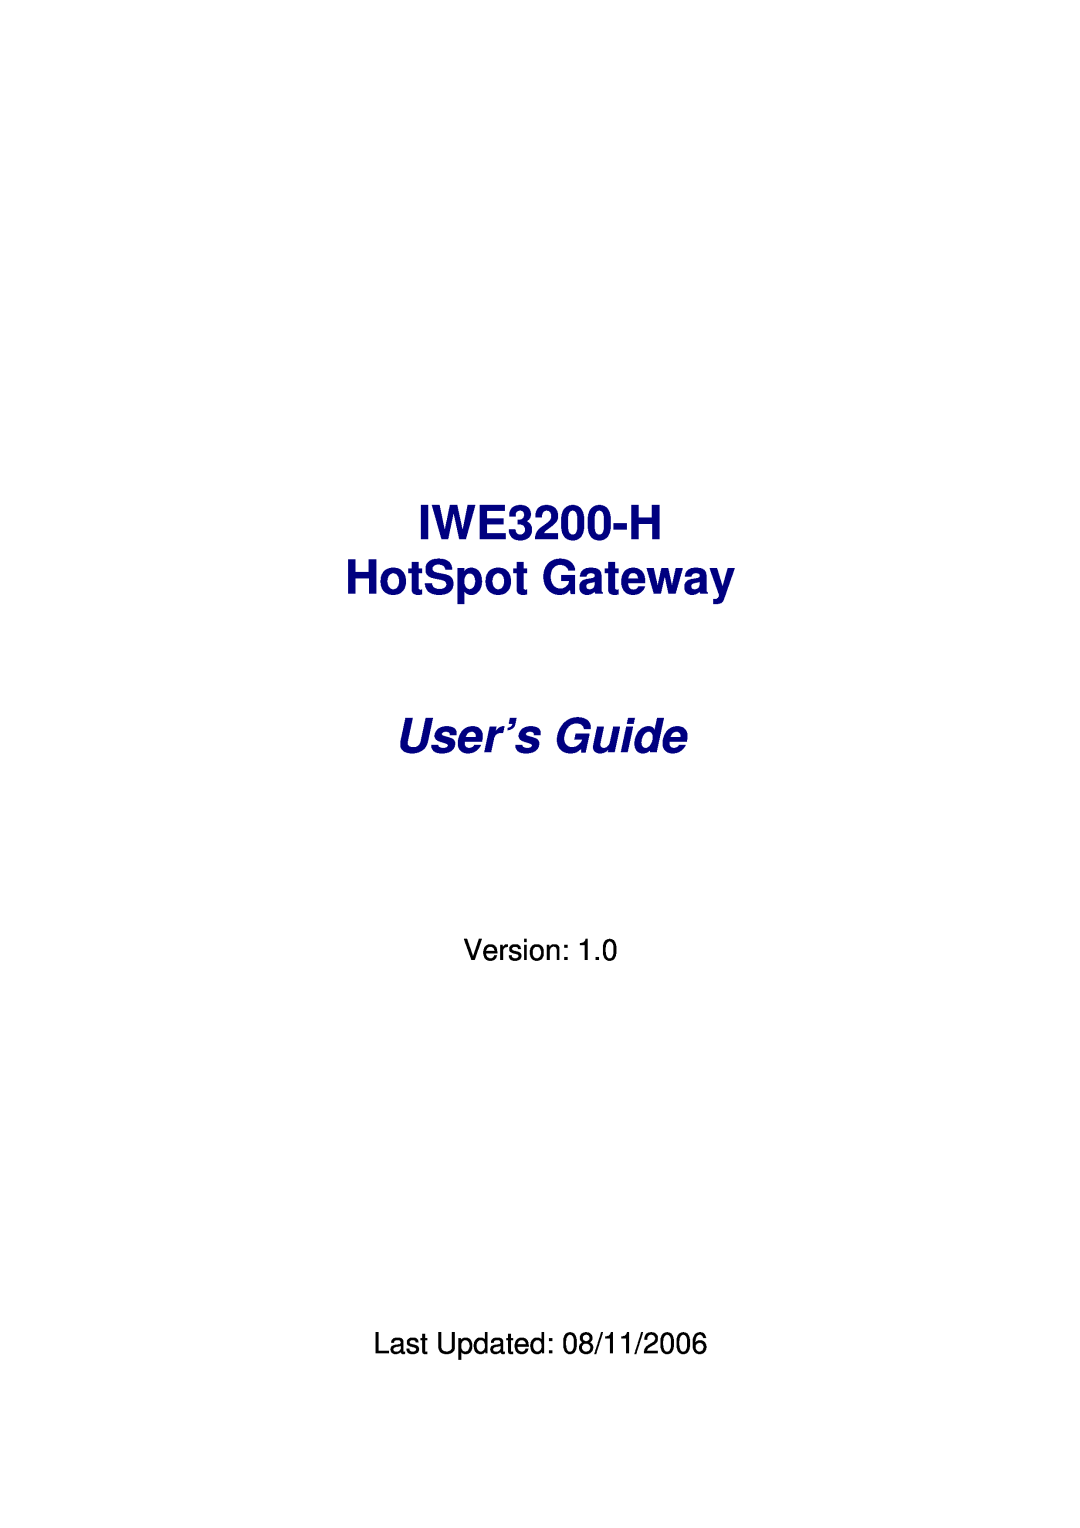 Epson manual IWE3200-H HotSpot Gateway, User’s Guide, Version: Last Updated: 08/11/2006 